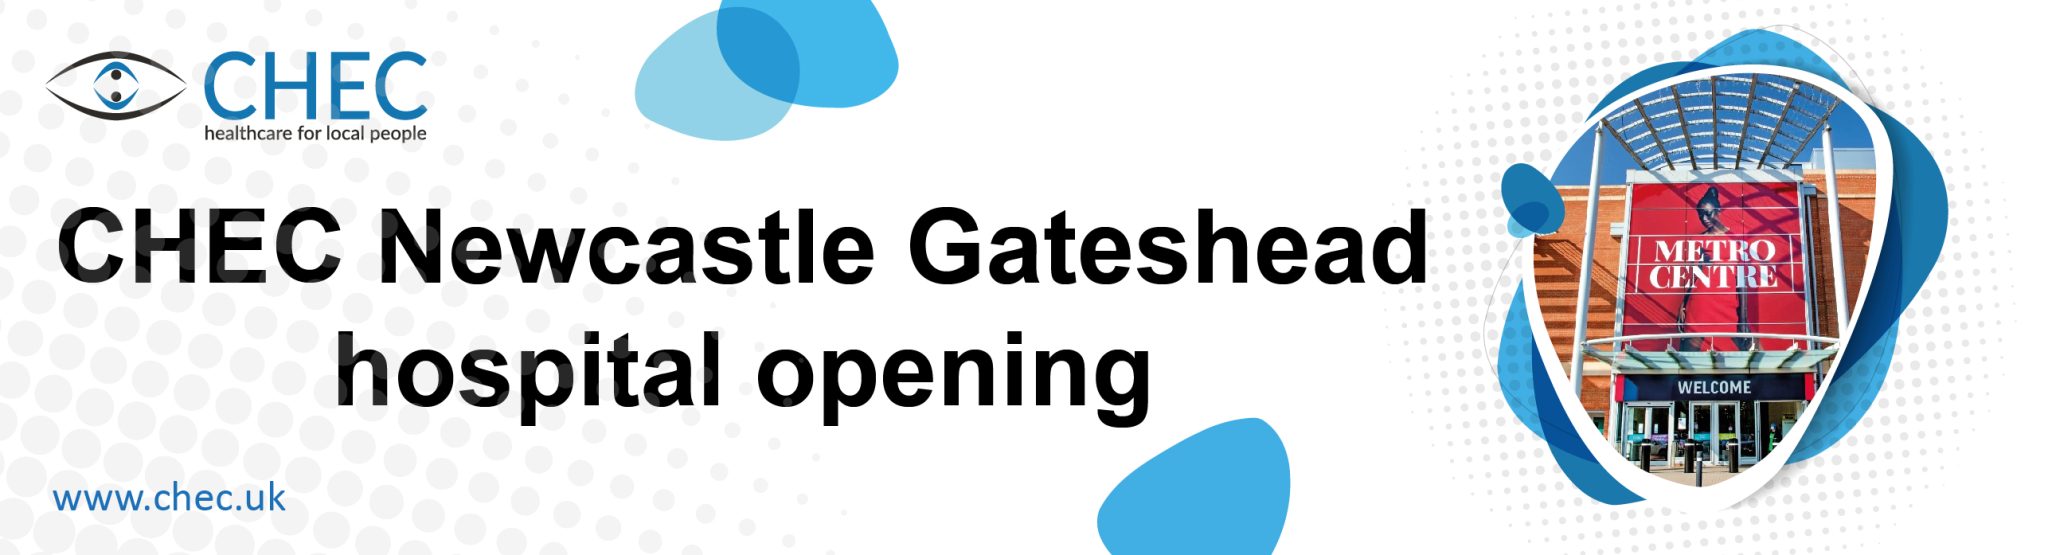 chec newcastle gateshead hospital opening